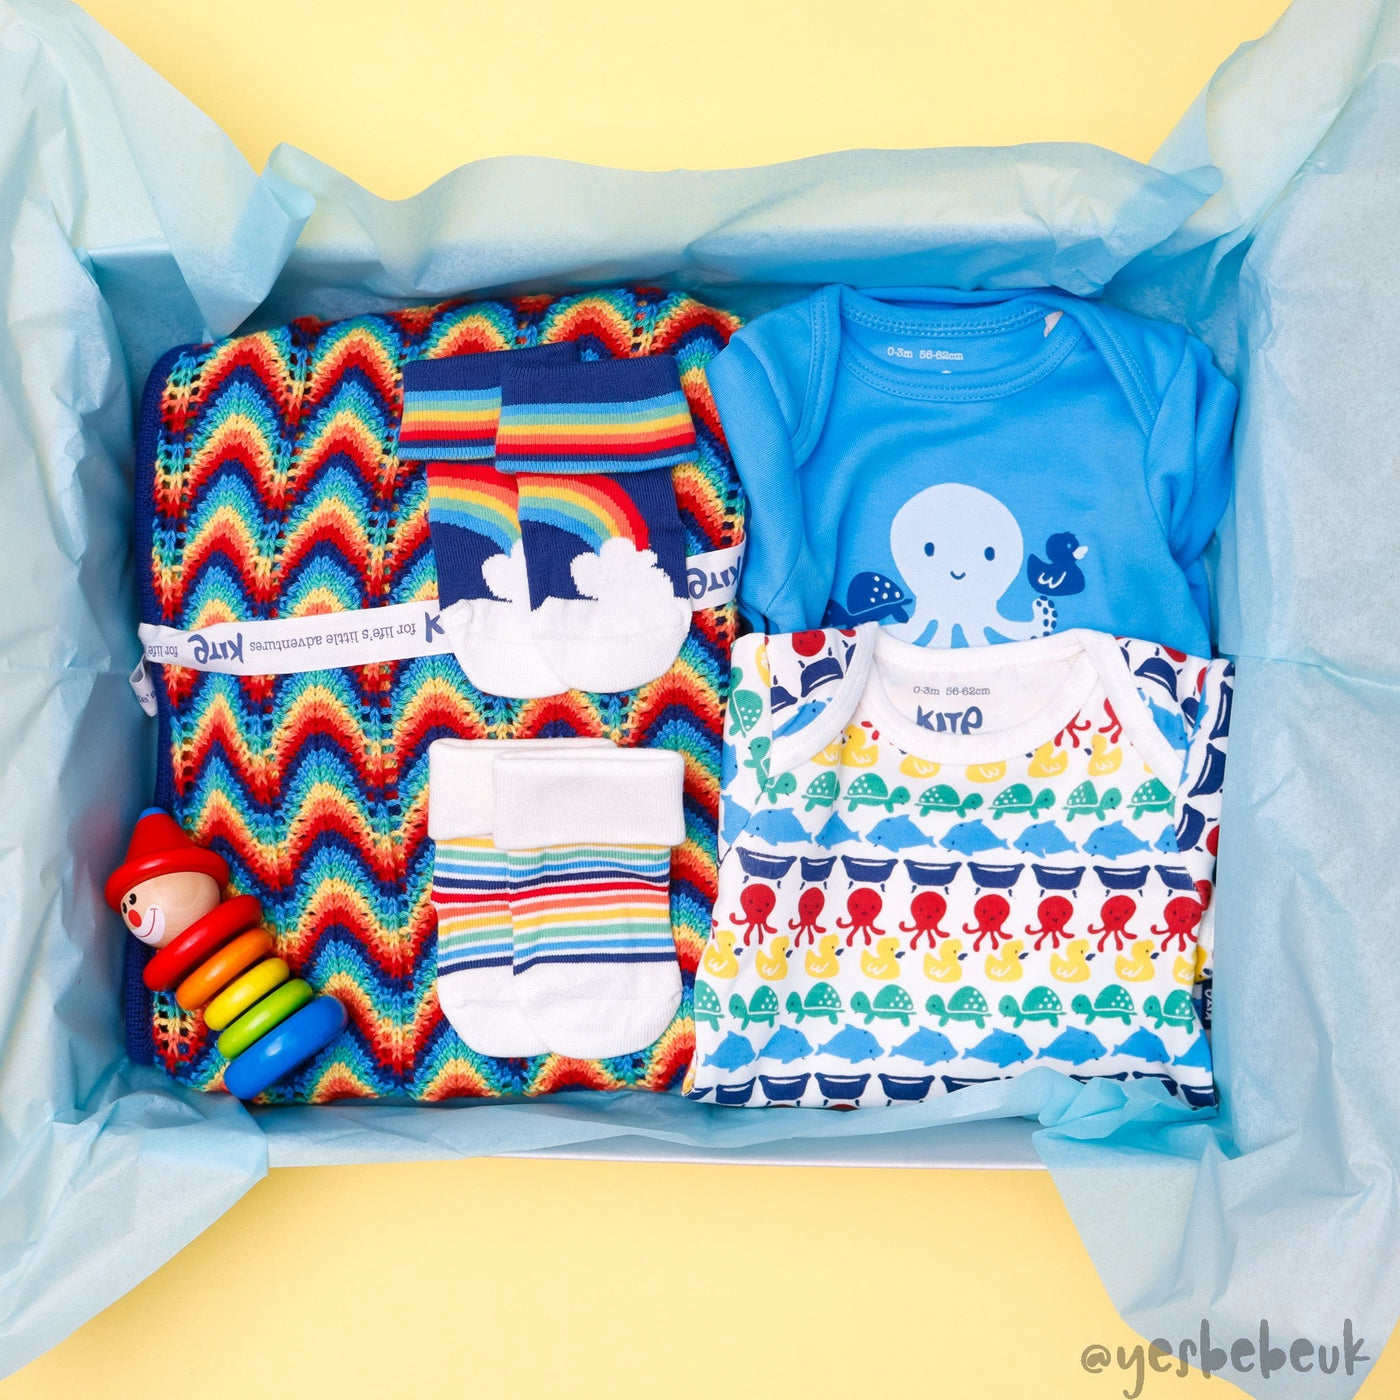 Rainbow Baby Organic Gift Box with Free Rattle